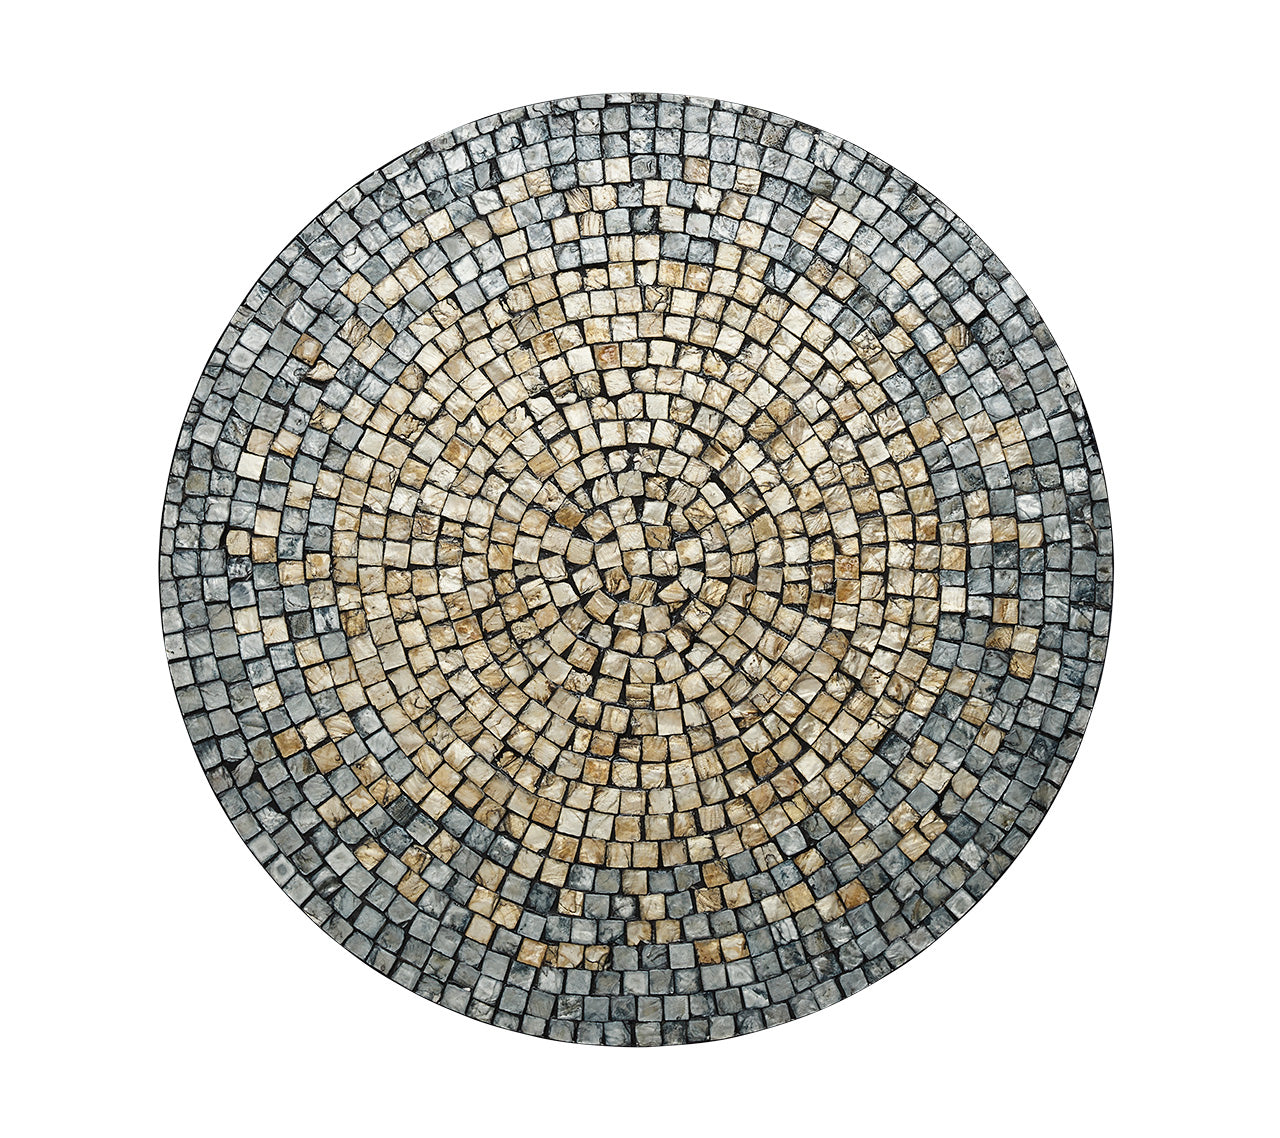 Kim Seybert Luxury Shell Mosaic Placemat in Gray & Taupe